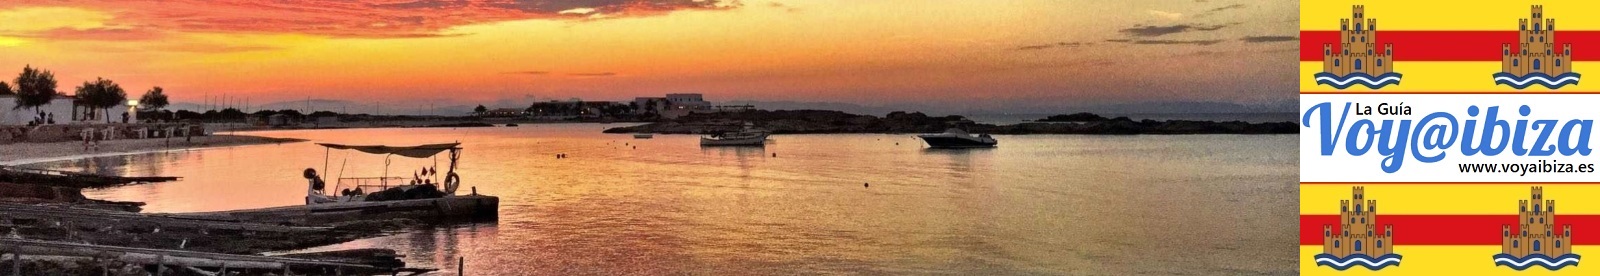 Formentera: Vista nocturna